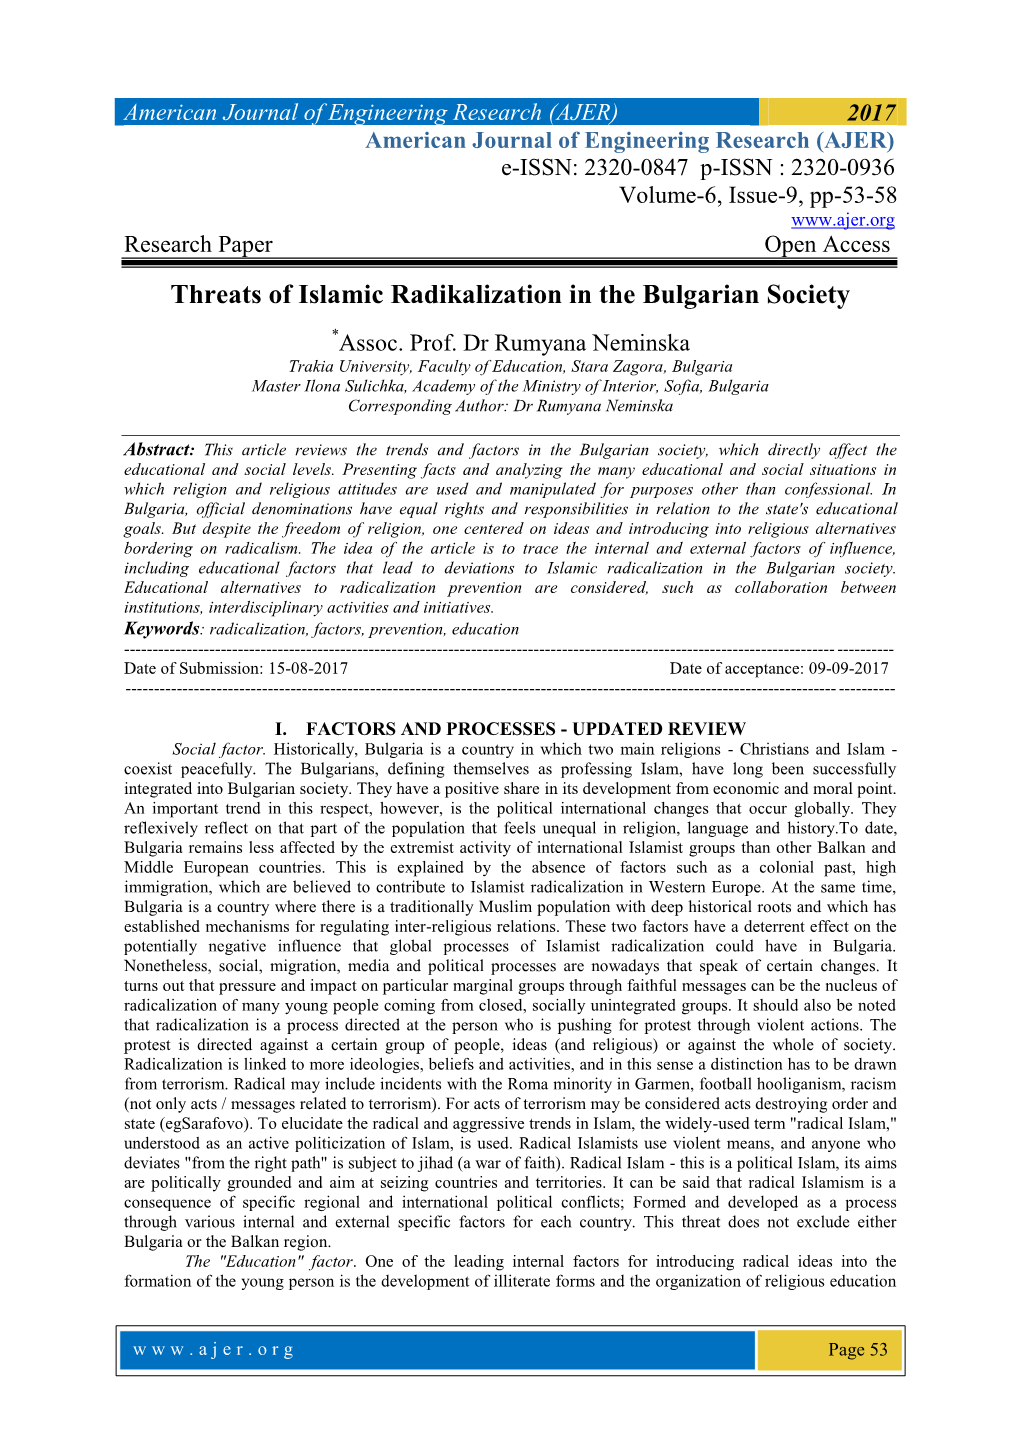 Threats of Islamic Radikalization in the Bulgarian Society